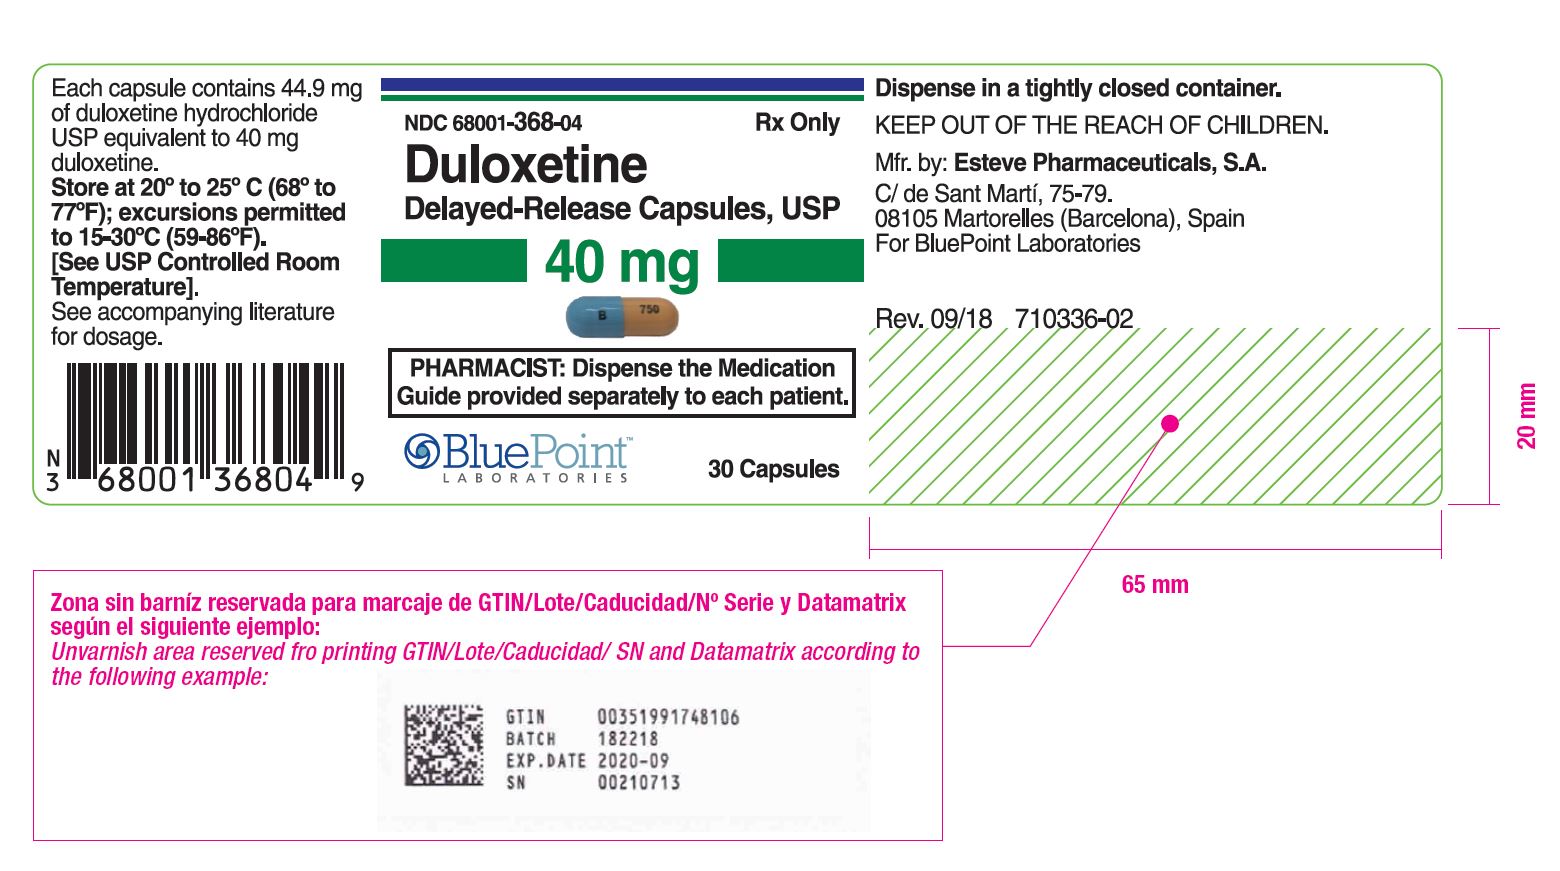 Duloxetine Label rev 03 2020